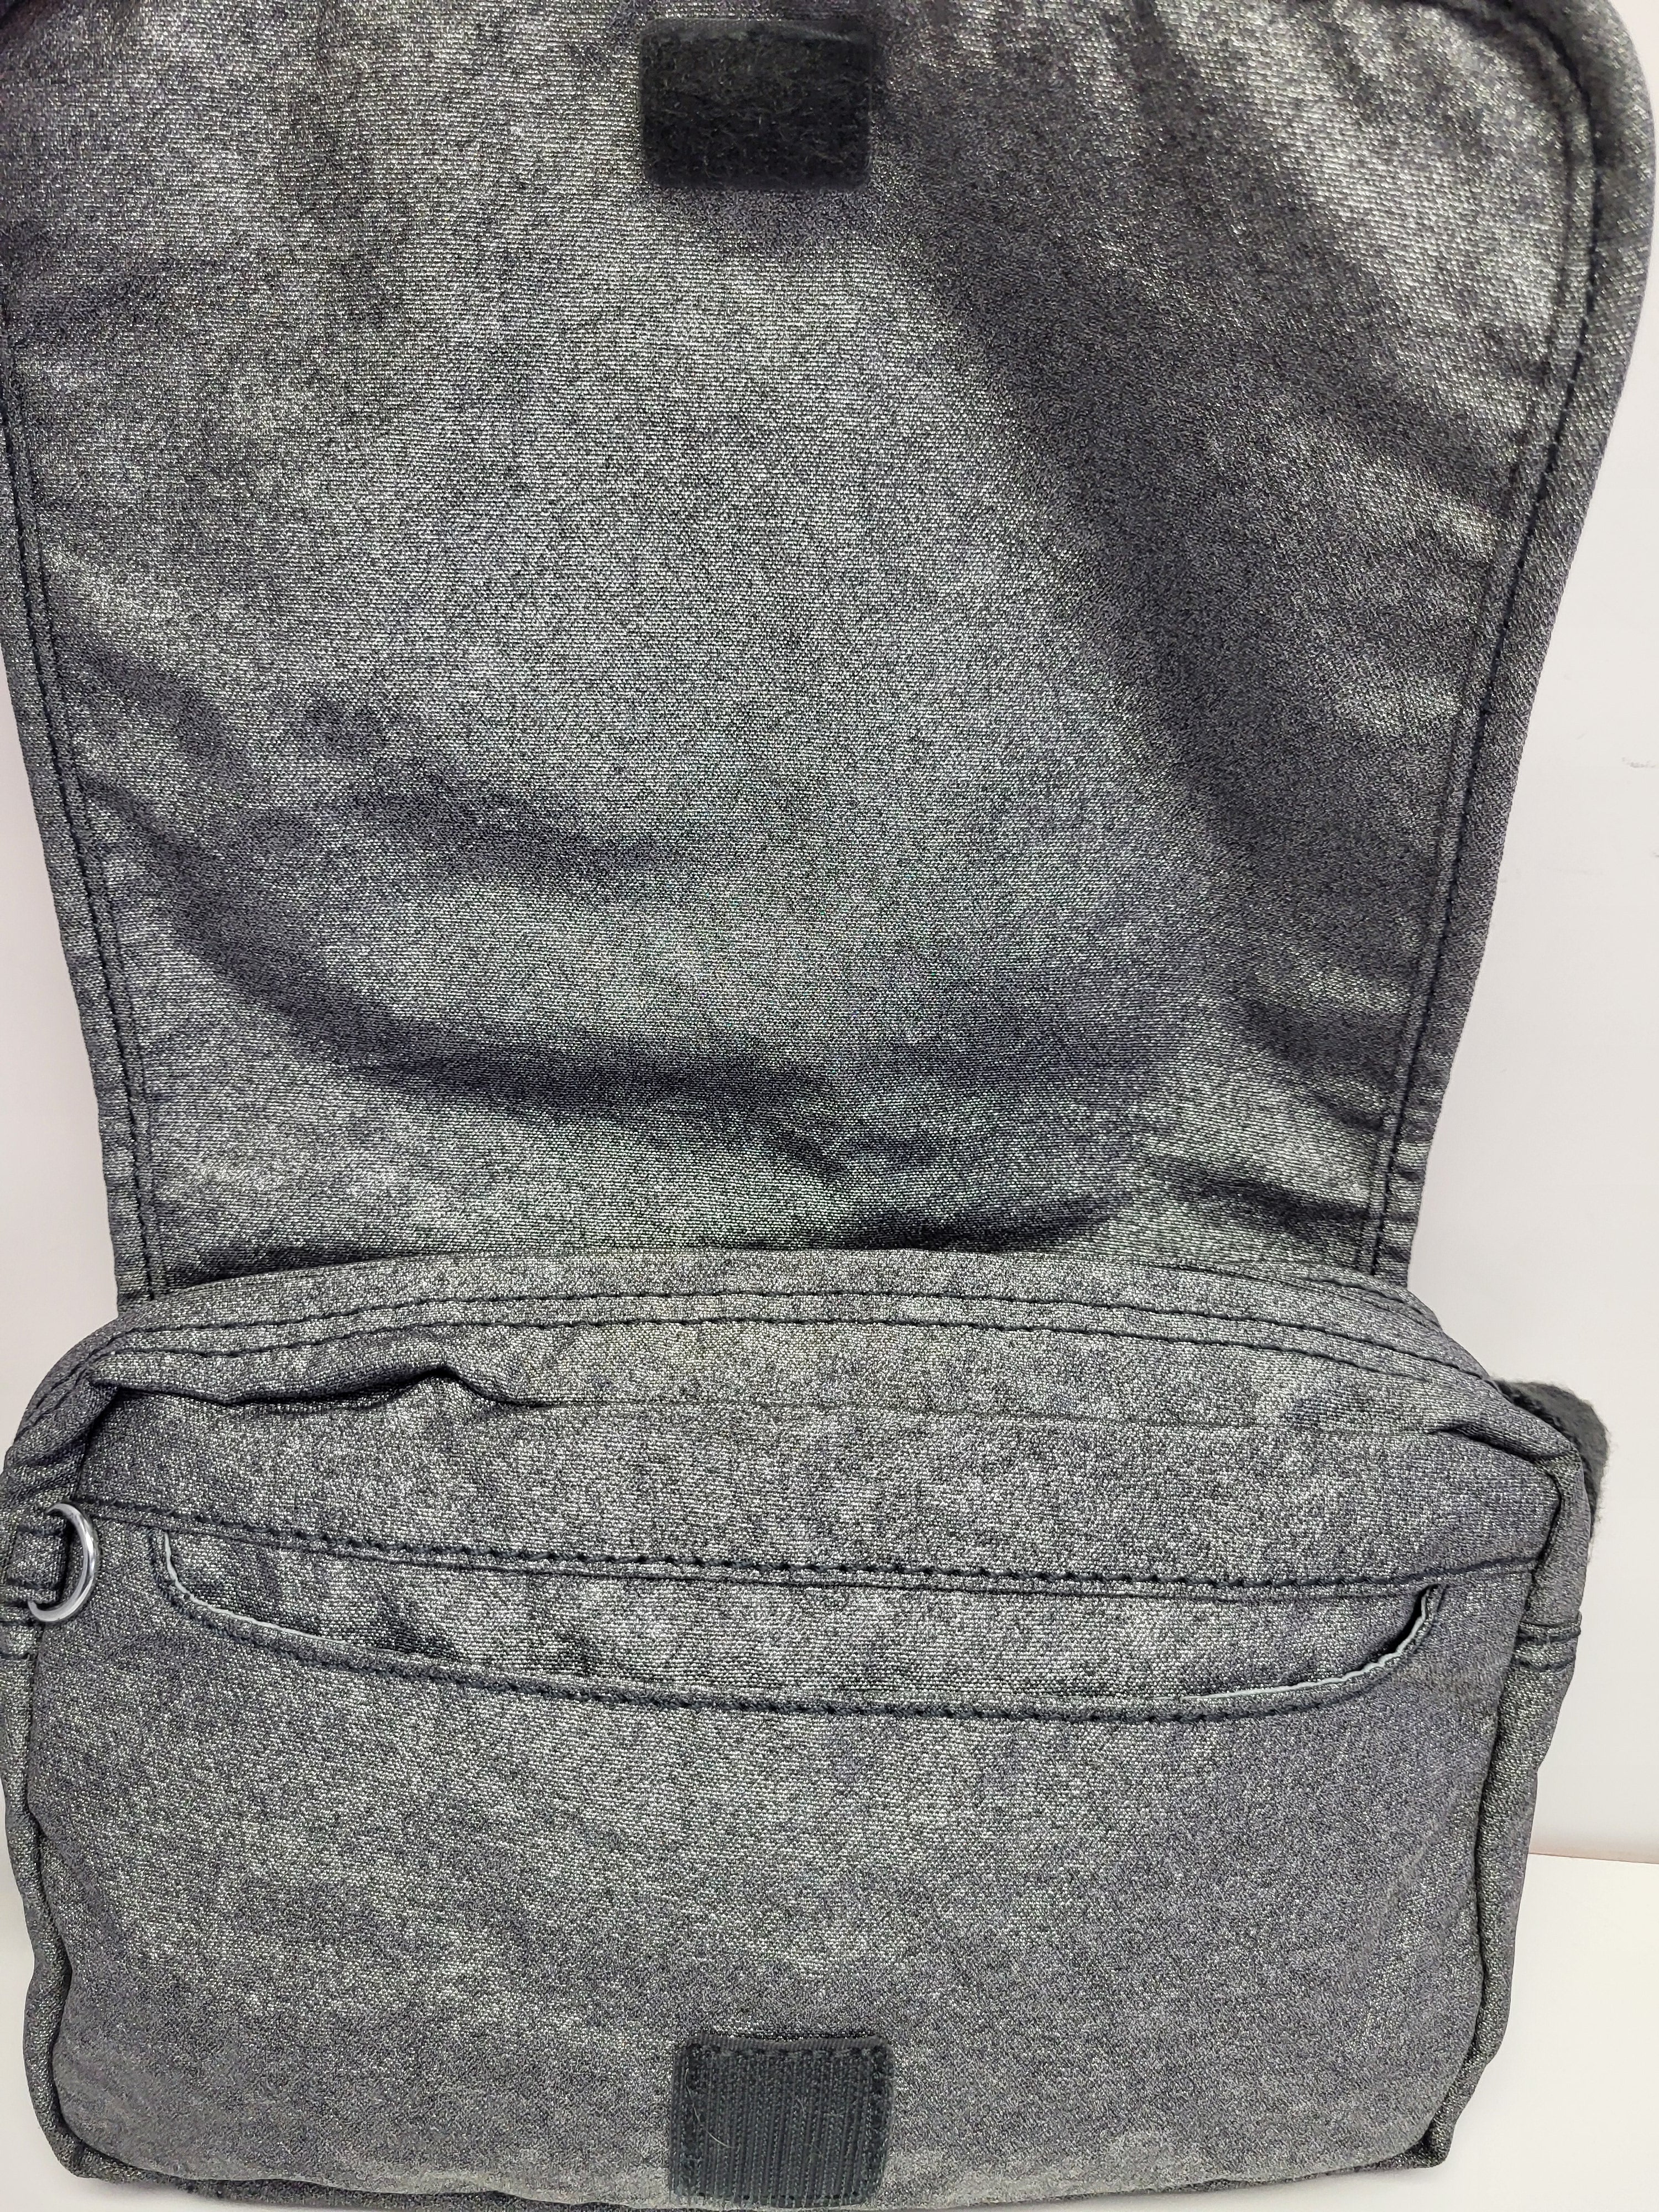 Kipling Silver/Grey Metallic Look Shoulder/Crossbody Bag